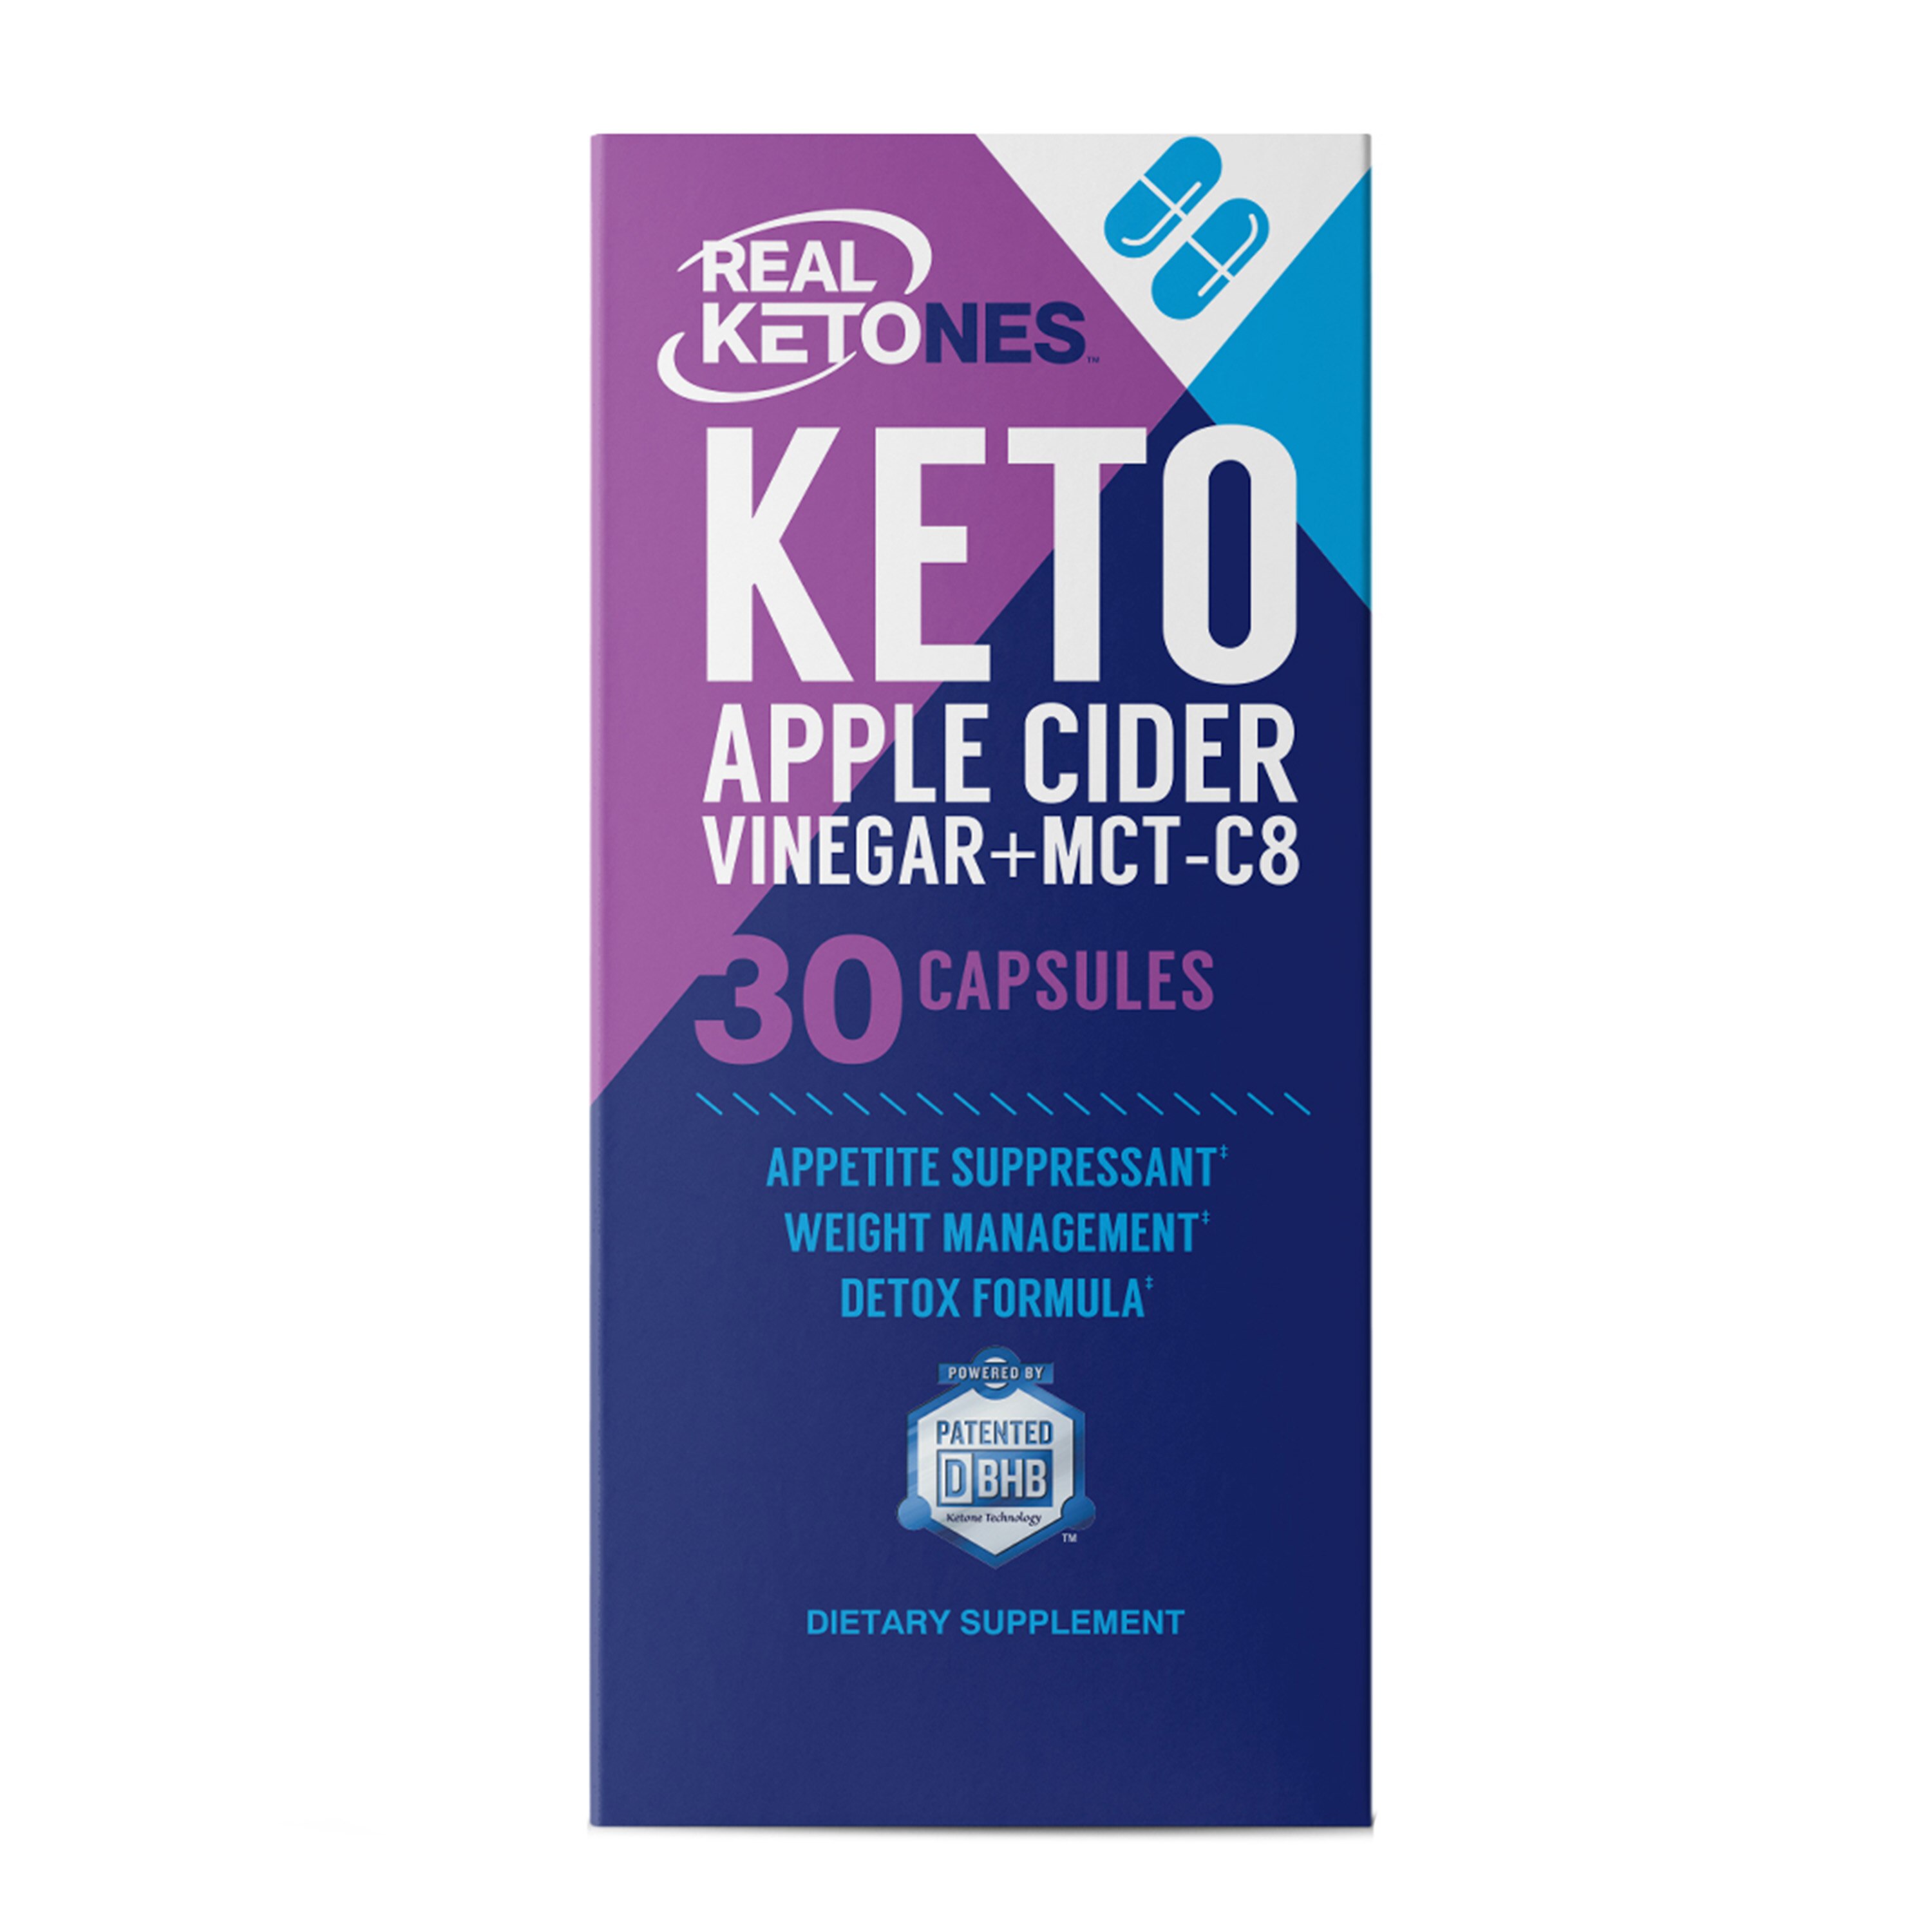 Real Ketones Keto Apple Cider Vinegar + MCT-C8 Capsules, 30 CT